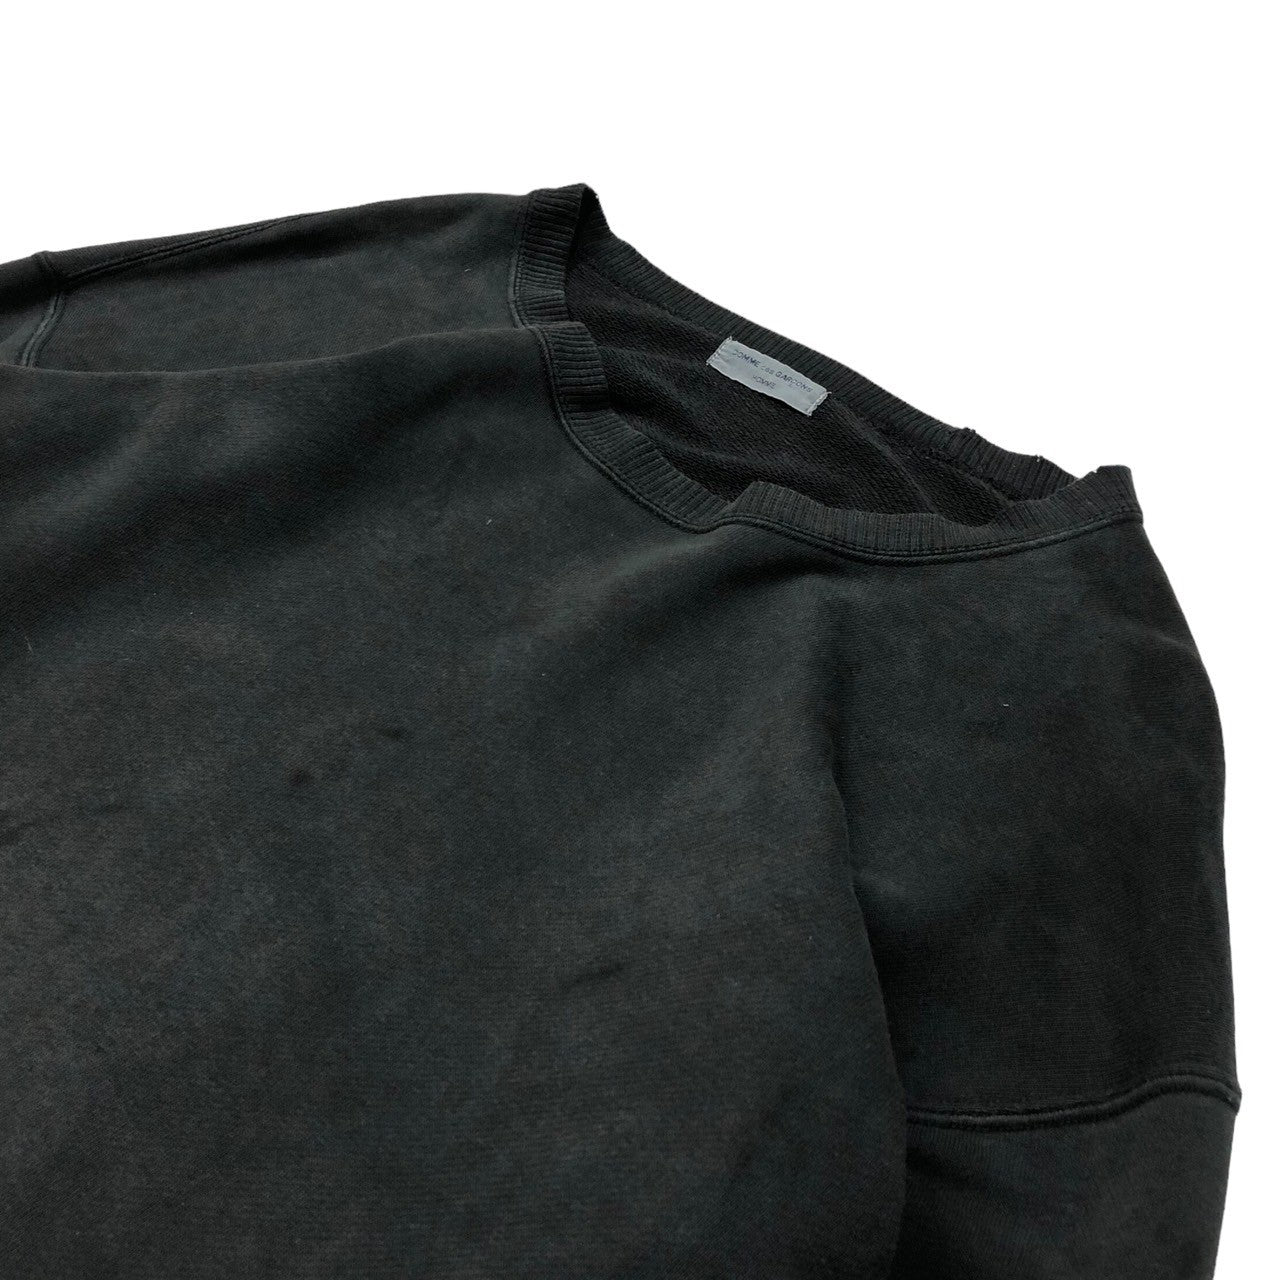 COMME des GARCONS HOMME(コムデギャルソンオム) 90's Back logo oversize sweatshirt バックロゴ オーバーサイズ スウェット 田中オム ヴィンテージ稀少品  ブラック×グレー